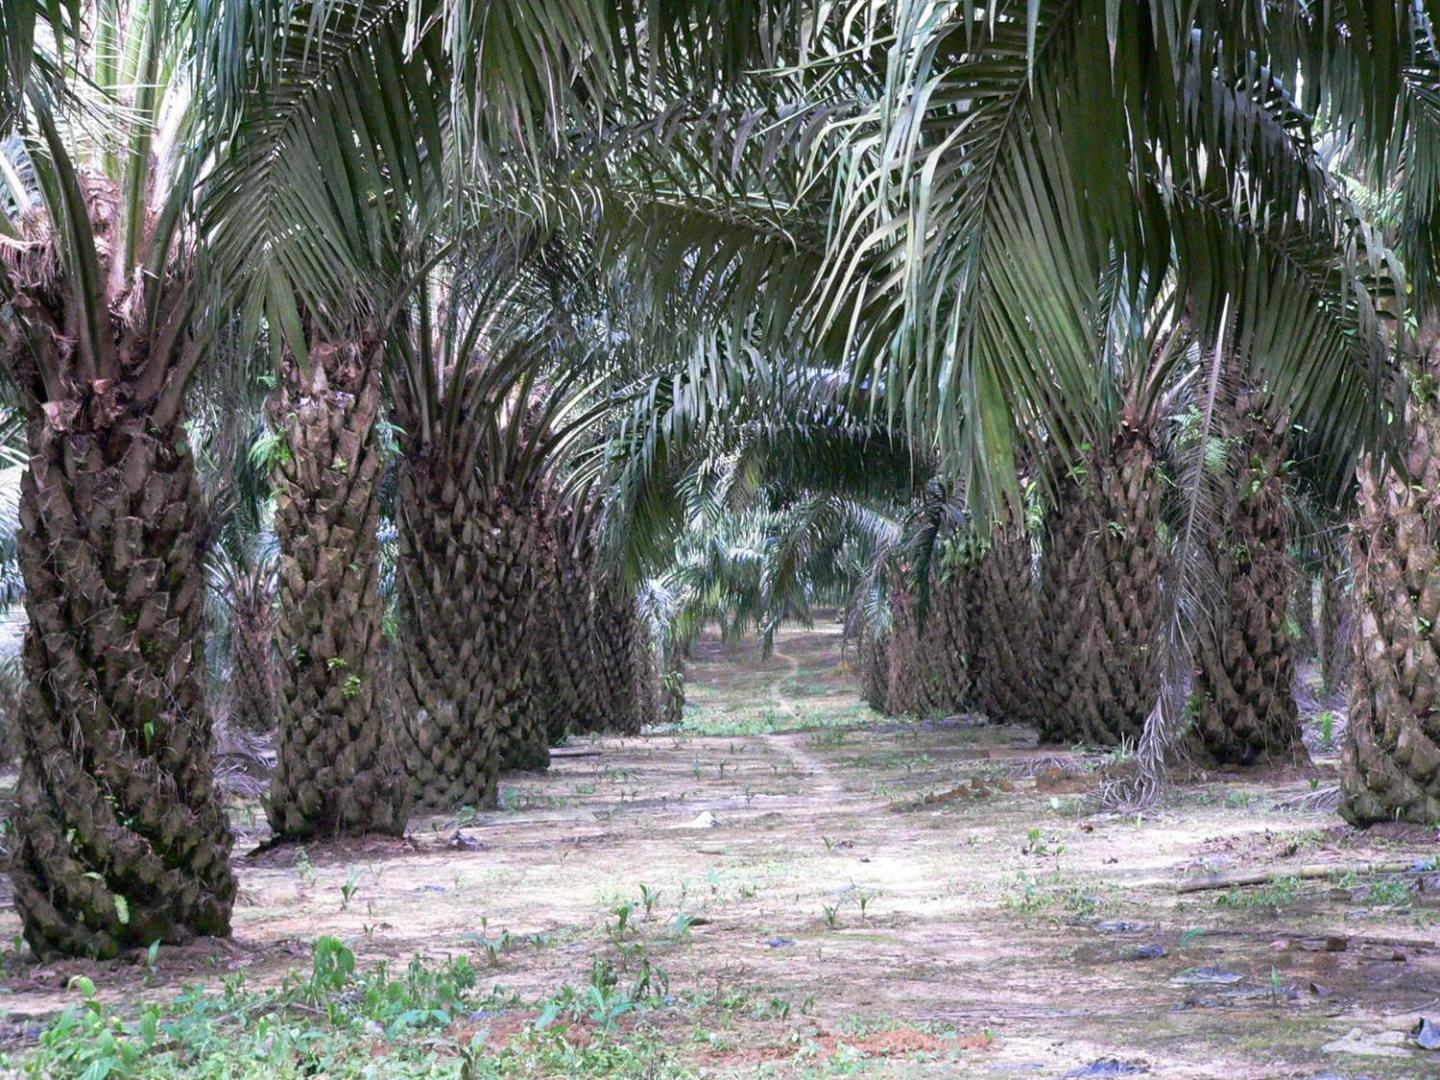 Oil Palm Plantation (1 of 2)